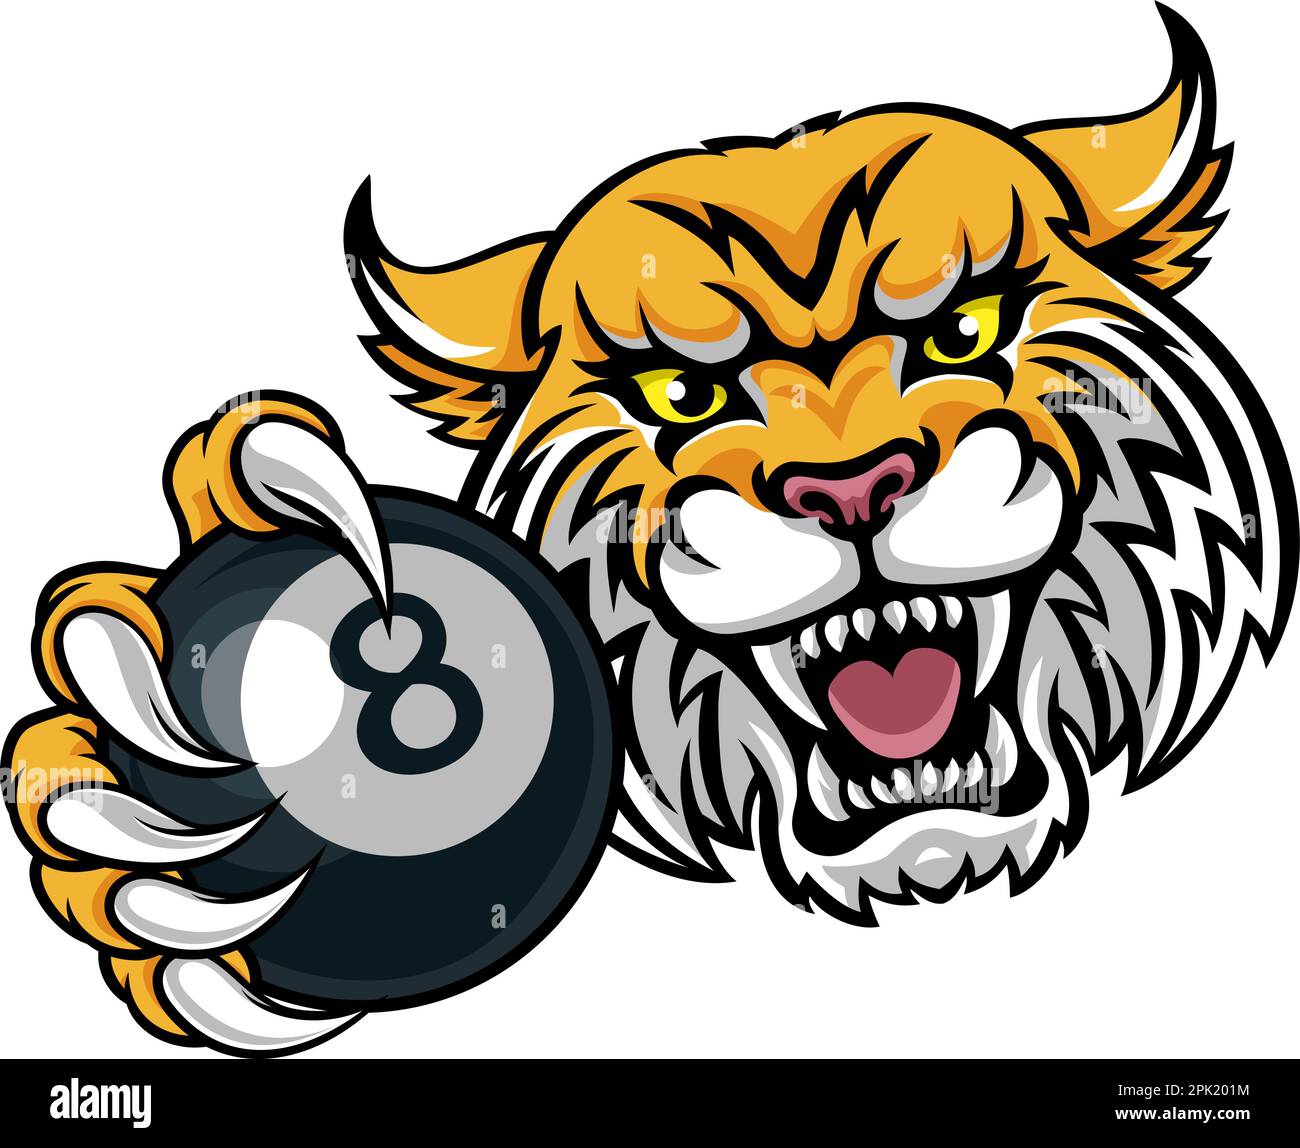 Wildcat Angry Pool 8 Ball Billiards Mascot Cartoon Stock Vector